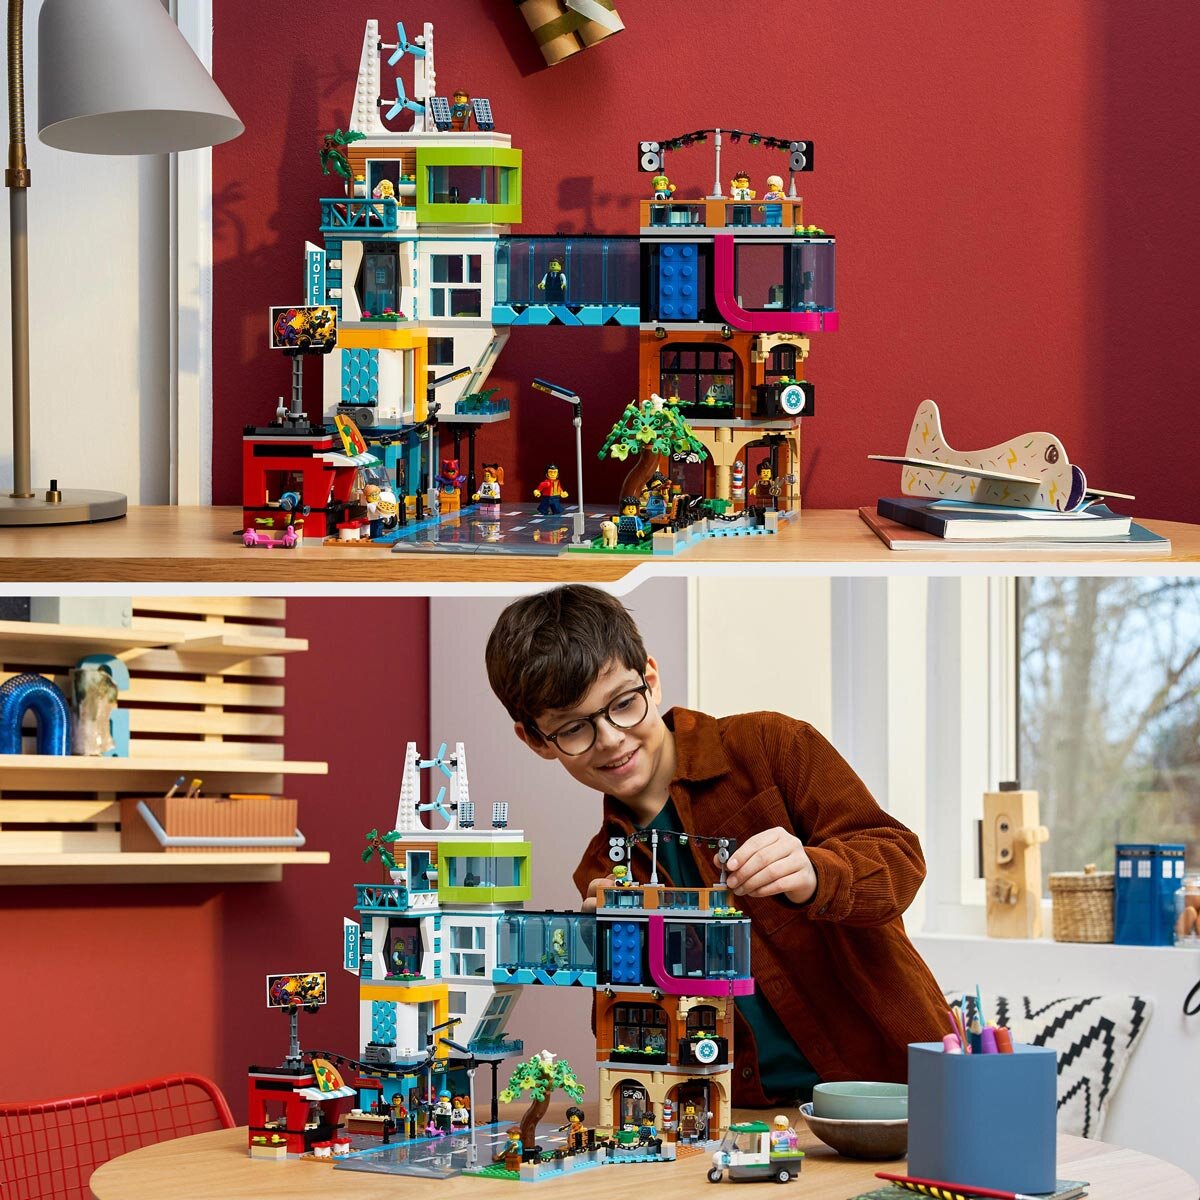 Buy LEGO CIty Centre Lifestyle Image at Costco.co.uk